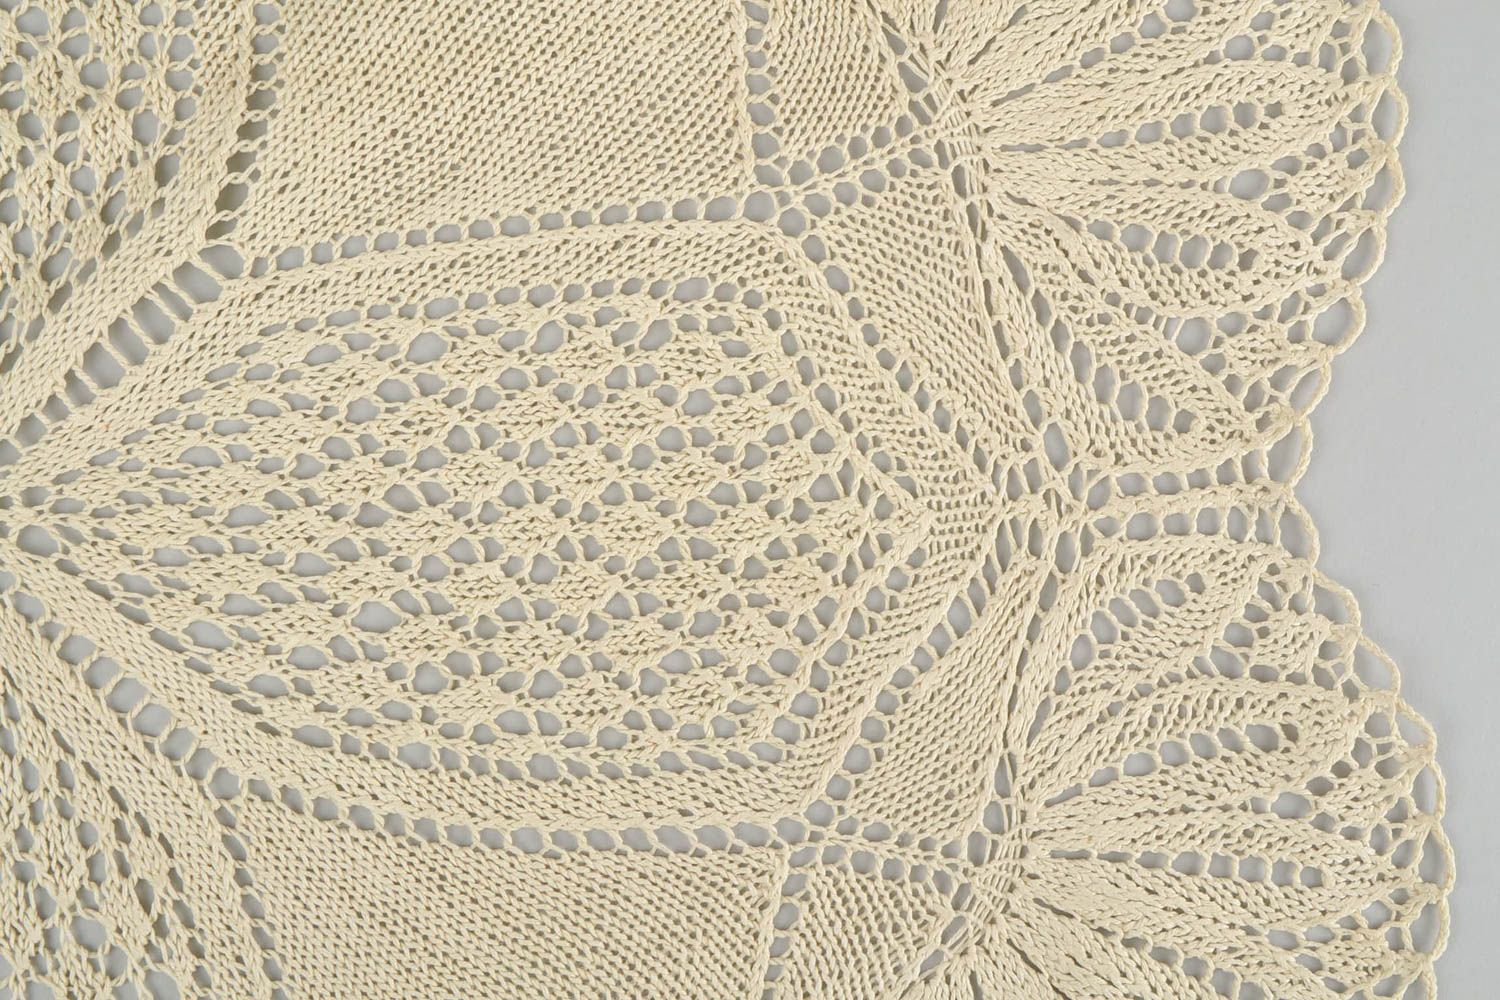 Handmade knitted decorative napkin decor napkin for dresser table home ideas photo 4